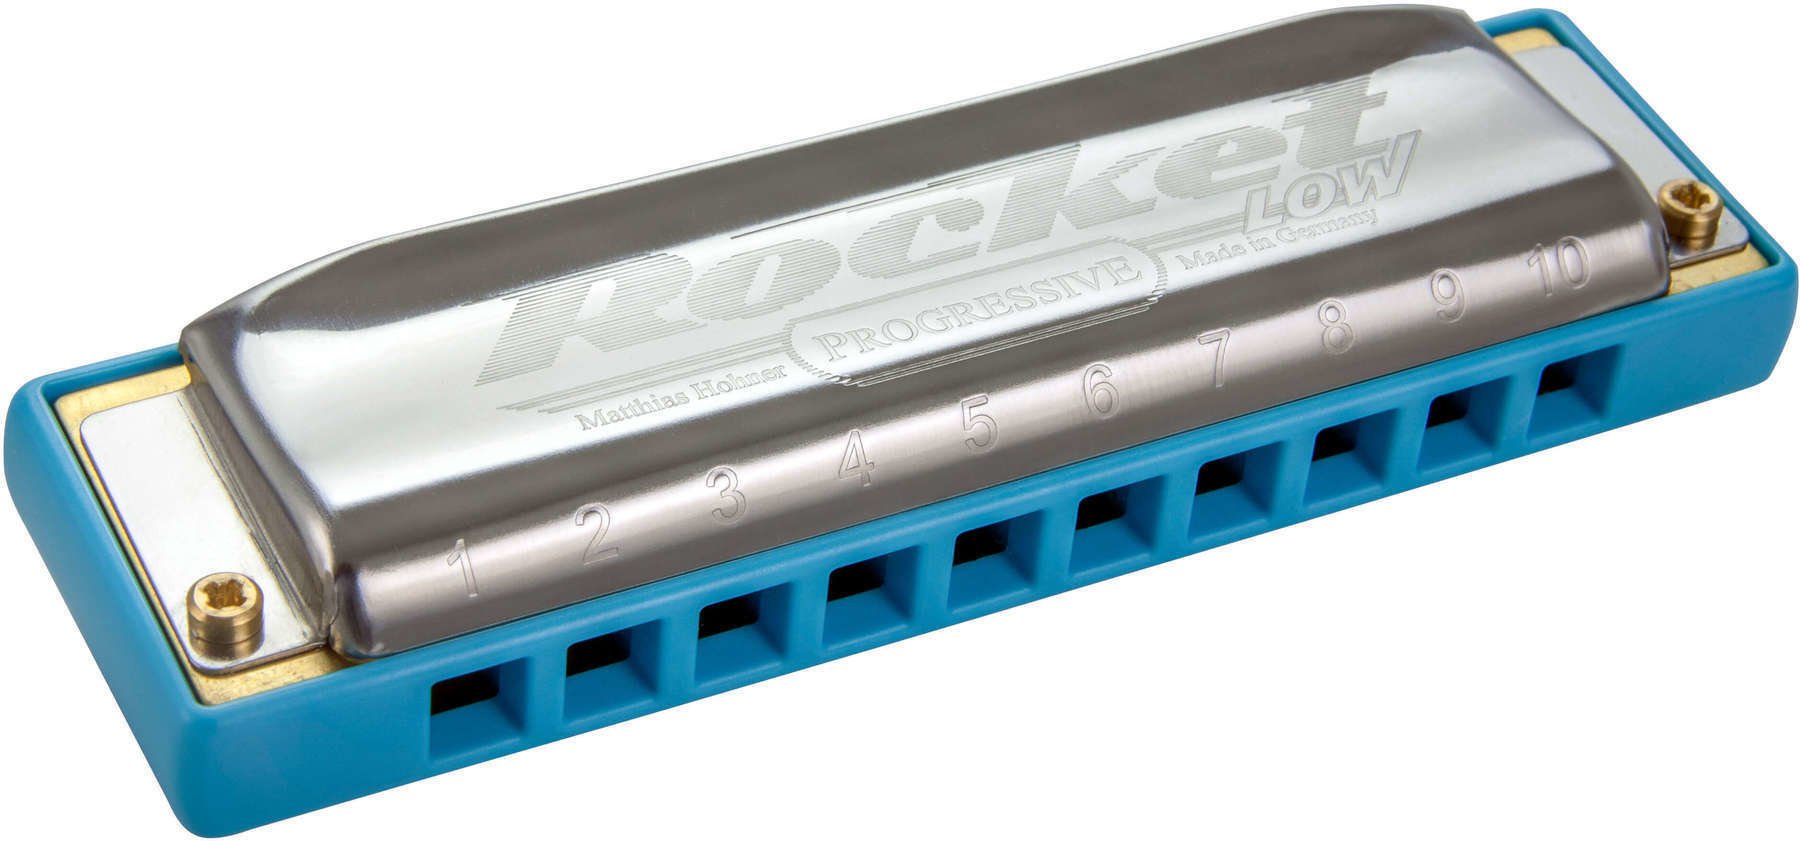 Diatonic harmonica Hohner Rocket Low C-major